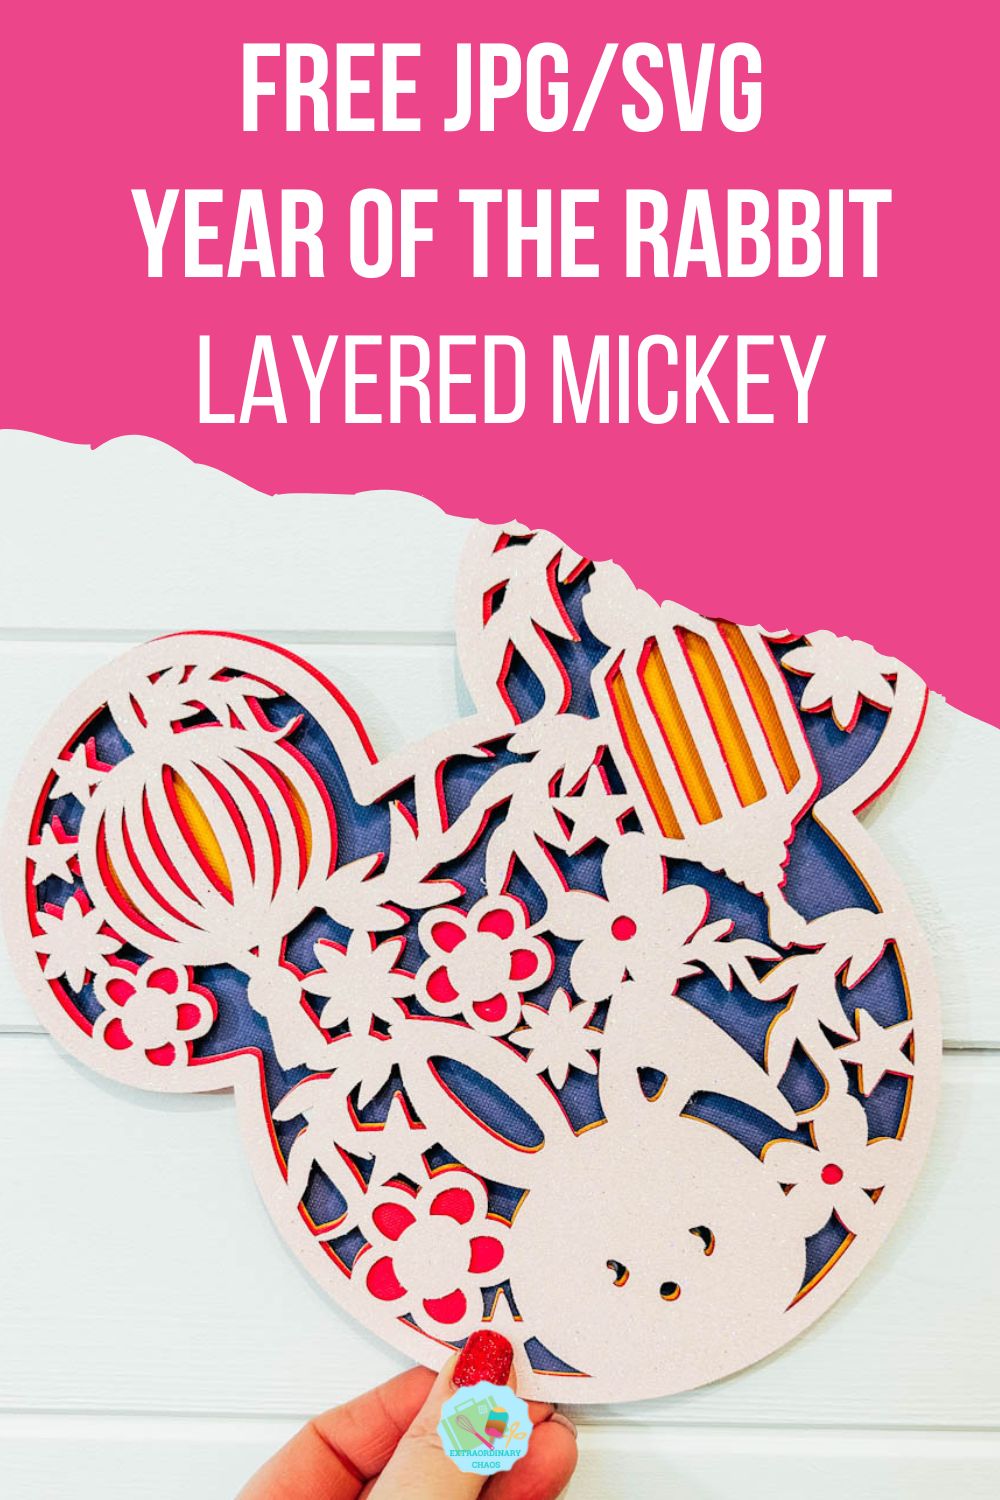 Free JPG SVG Year Of The Rabbit Layered Mickey